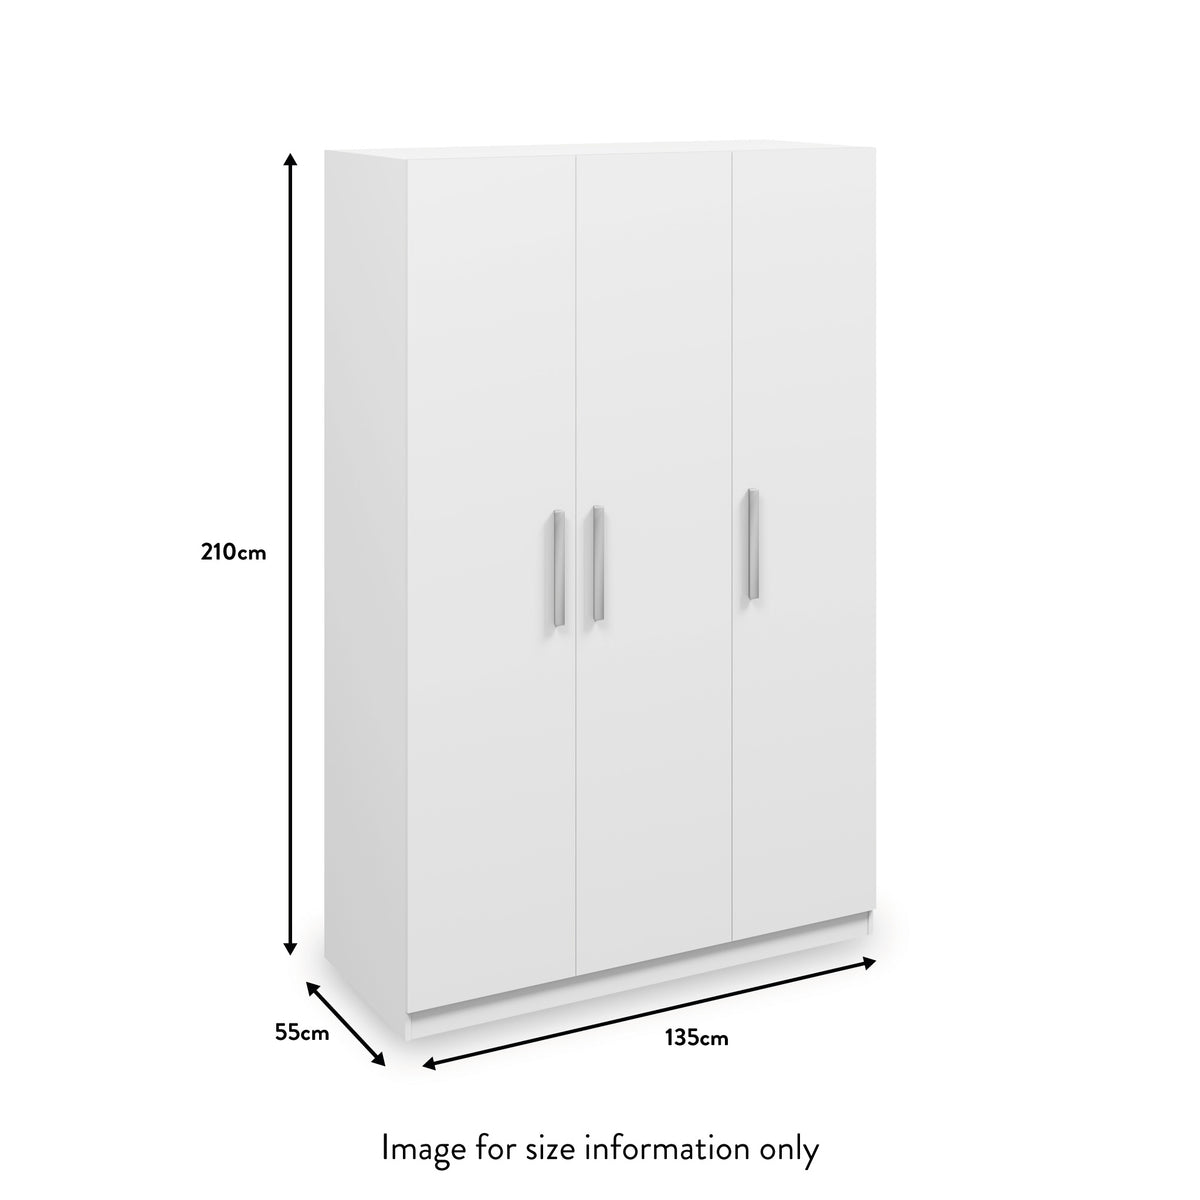 Meribel White 3 Door Wardrobe dimensions